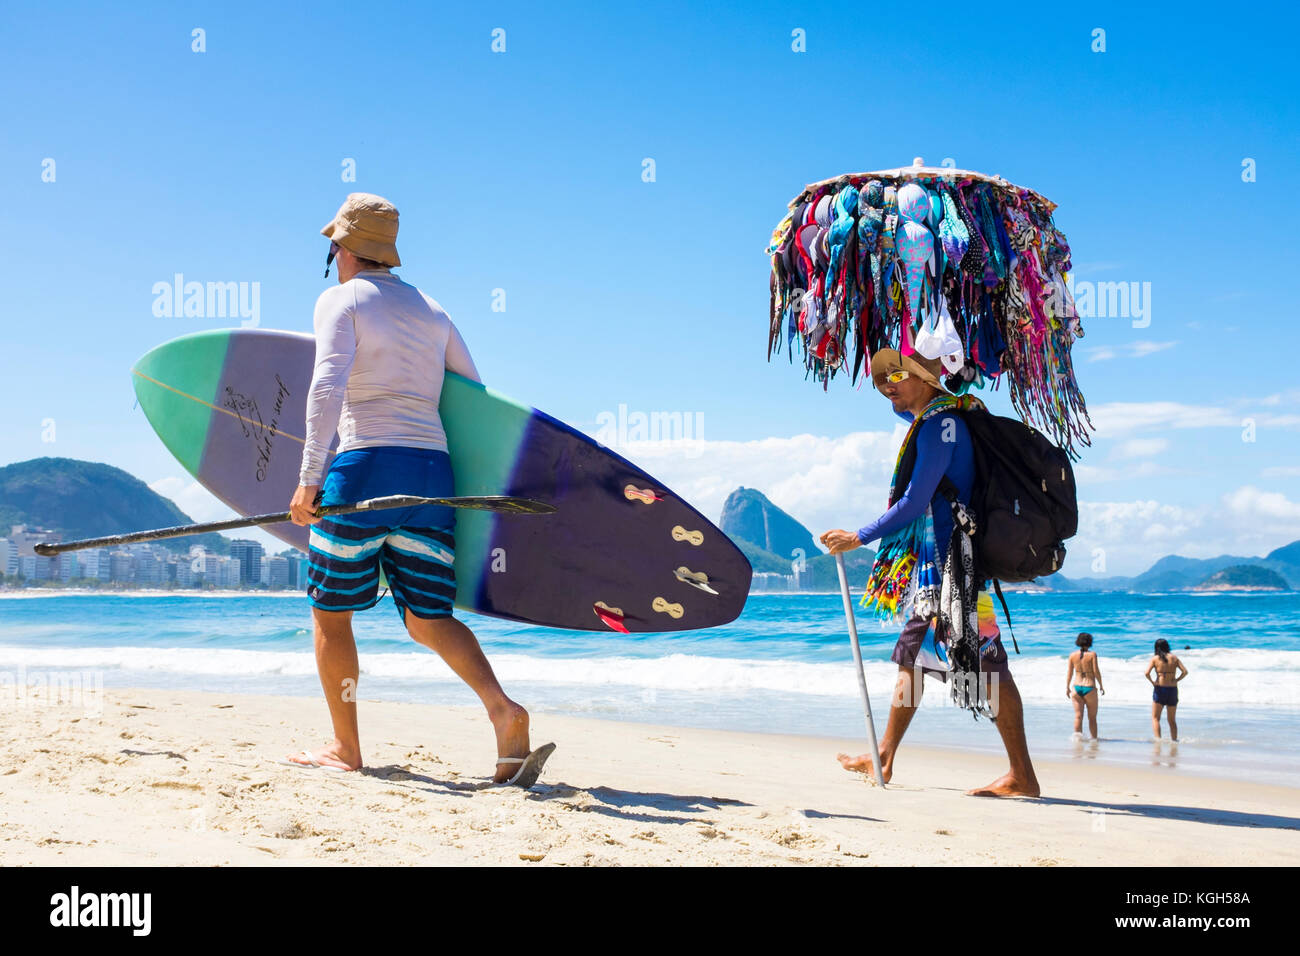 RIO DE JANEIRO - MARCH 21, 2017: Brazilian vendor selling bikinis walks alongside a man carrying his stand-up paddle surfboard along Copacabana Beach. Stock Photo